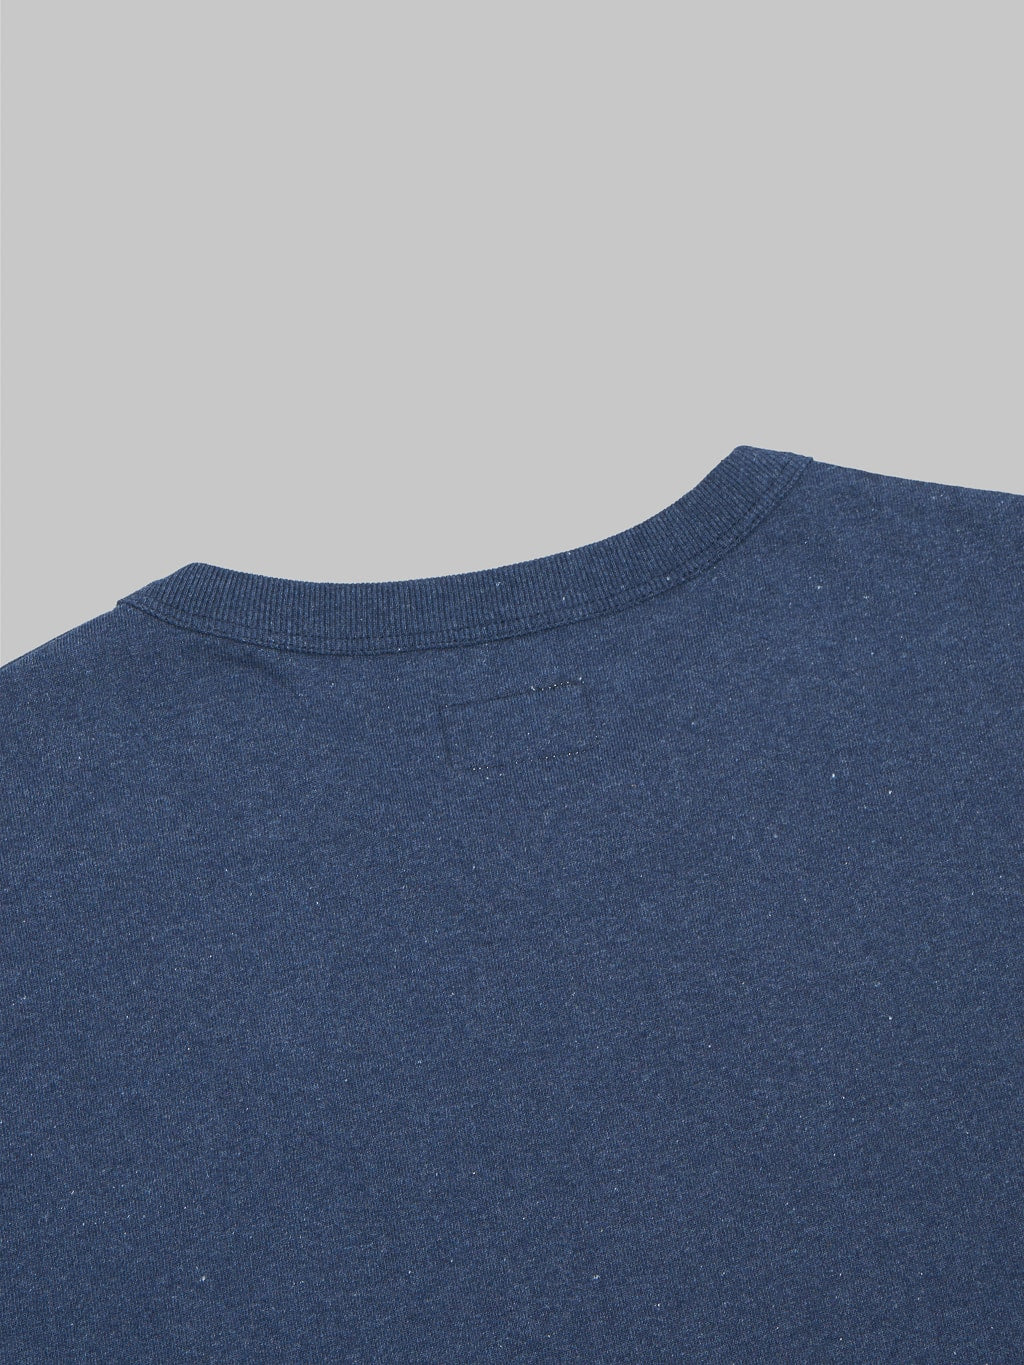 Japan Blue Recycled Denim Tshirt Dark Indigo cotton